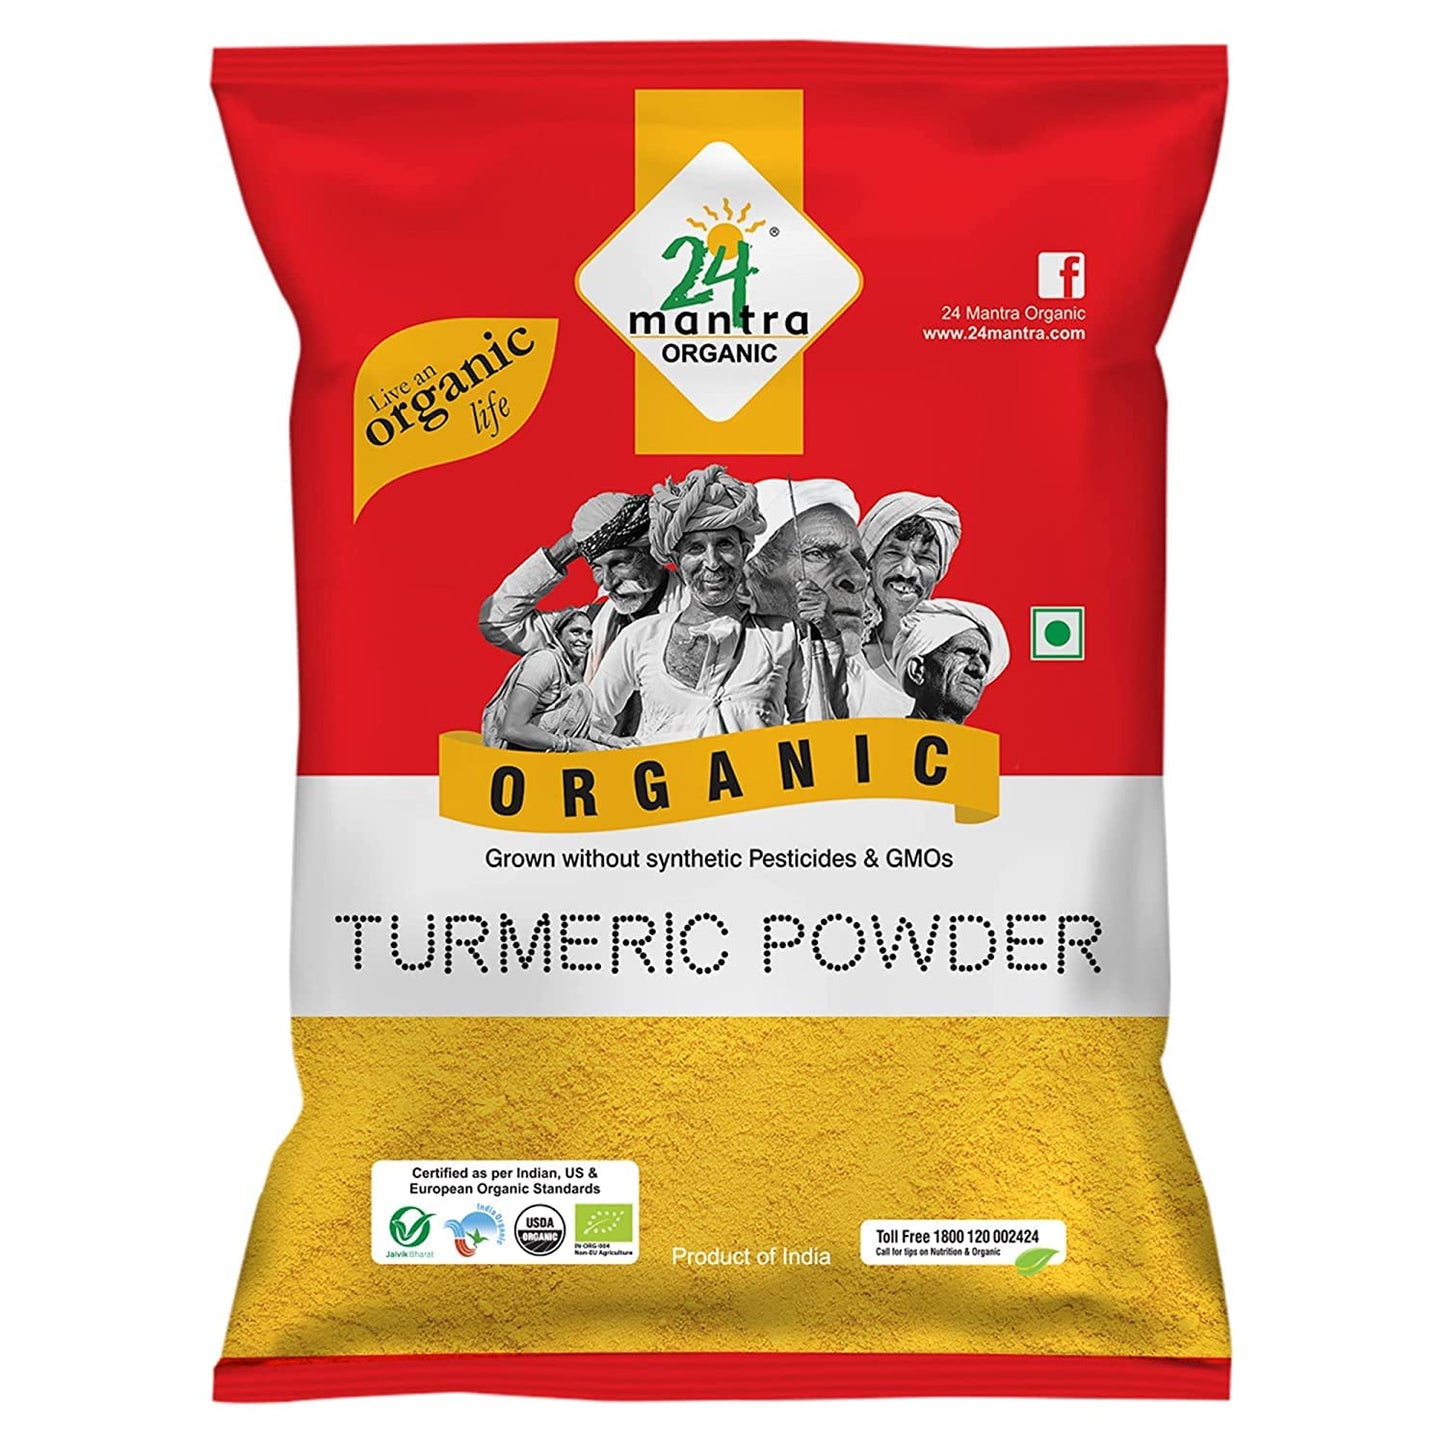 24 Mantra Organic Turmeric Powder - buy in USA, Australia, Canada